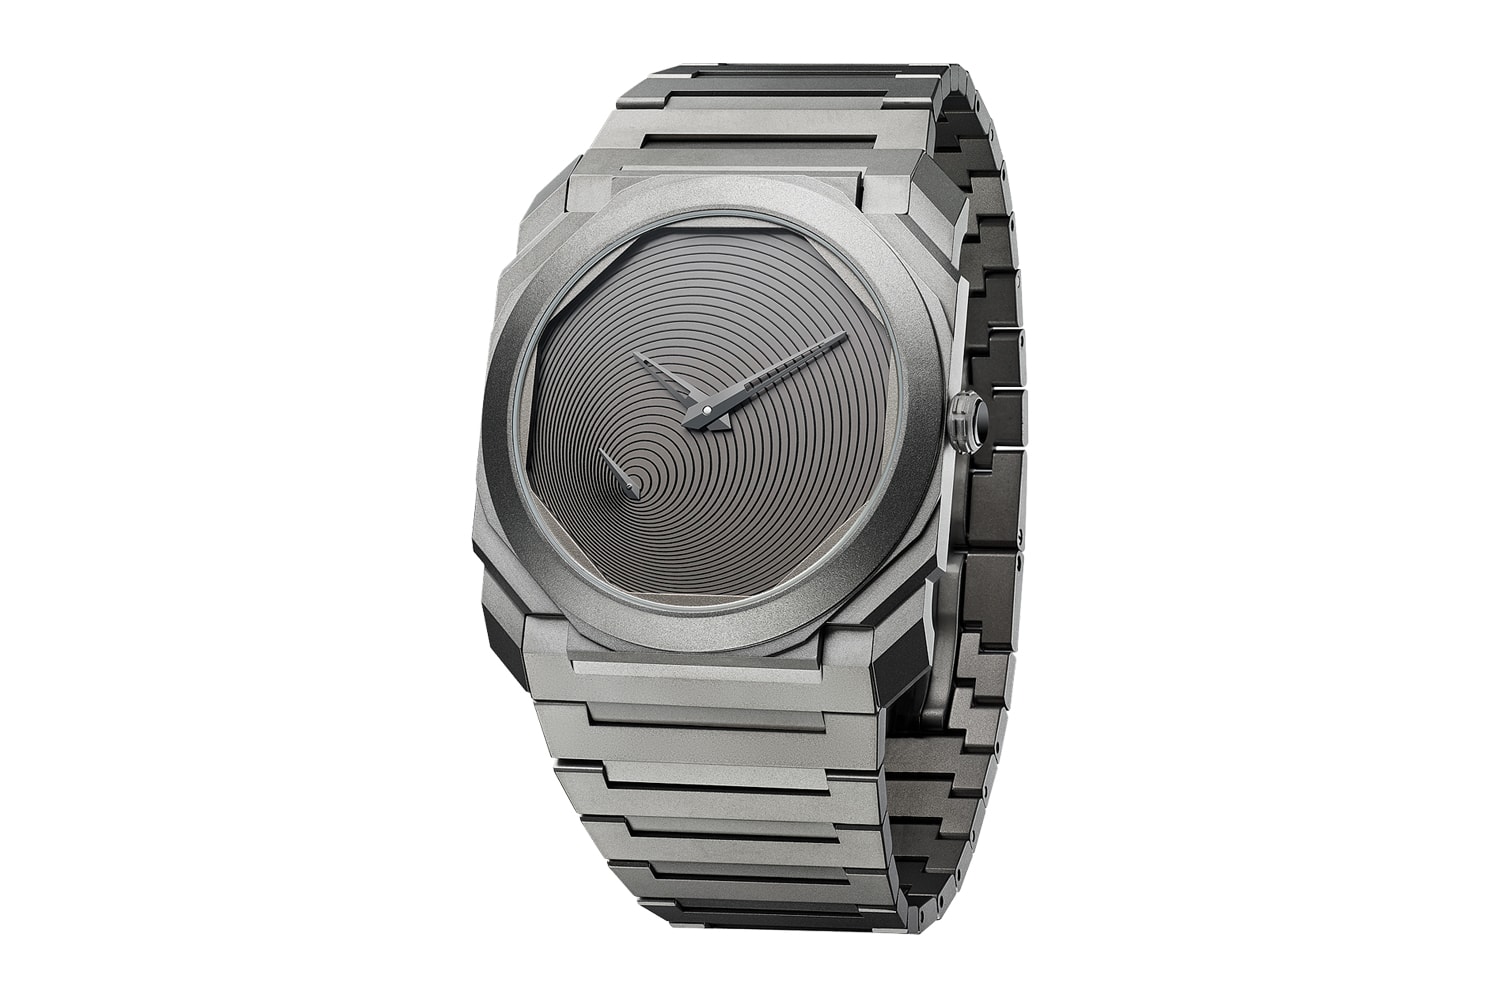 Tadao Ando BVLGARI Octo Finissimo Automatic Watch Release Info Buy Price